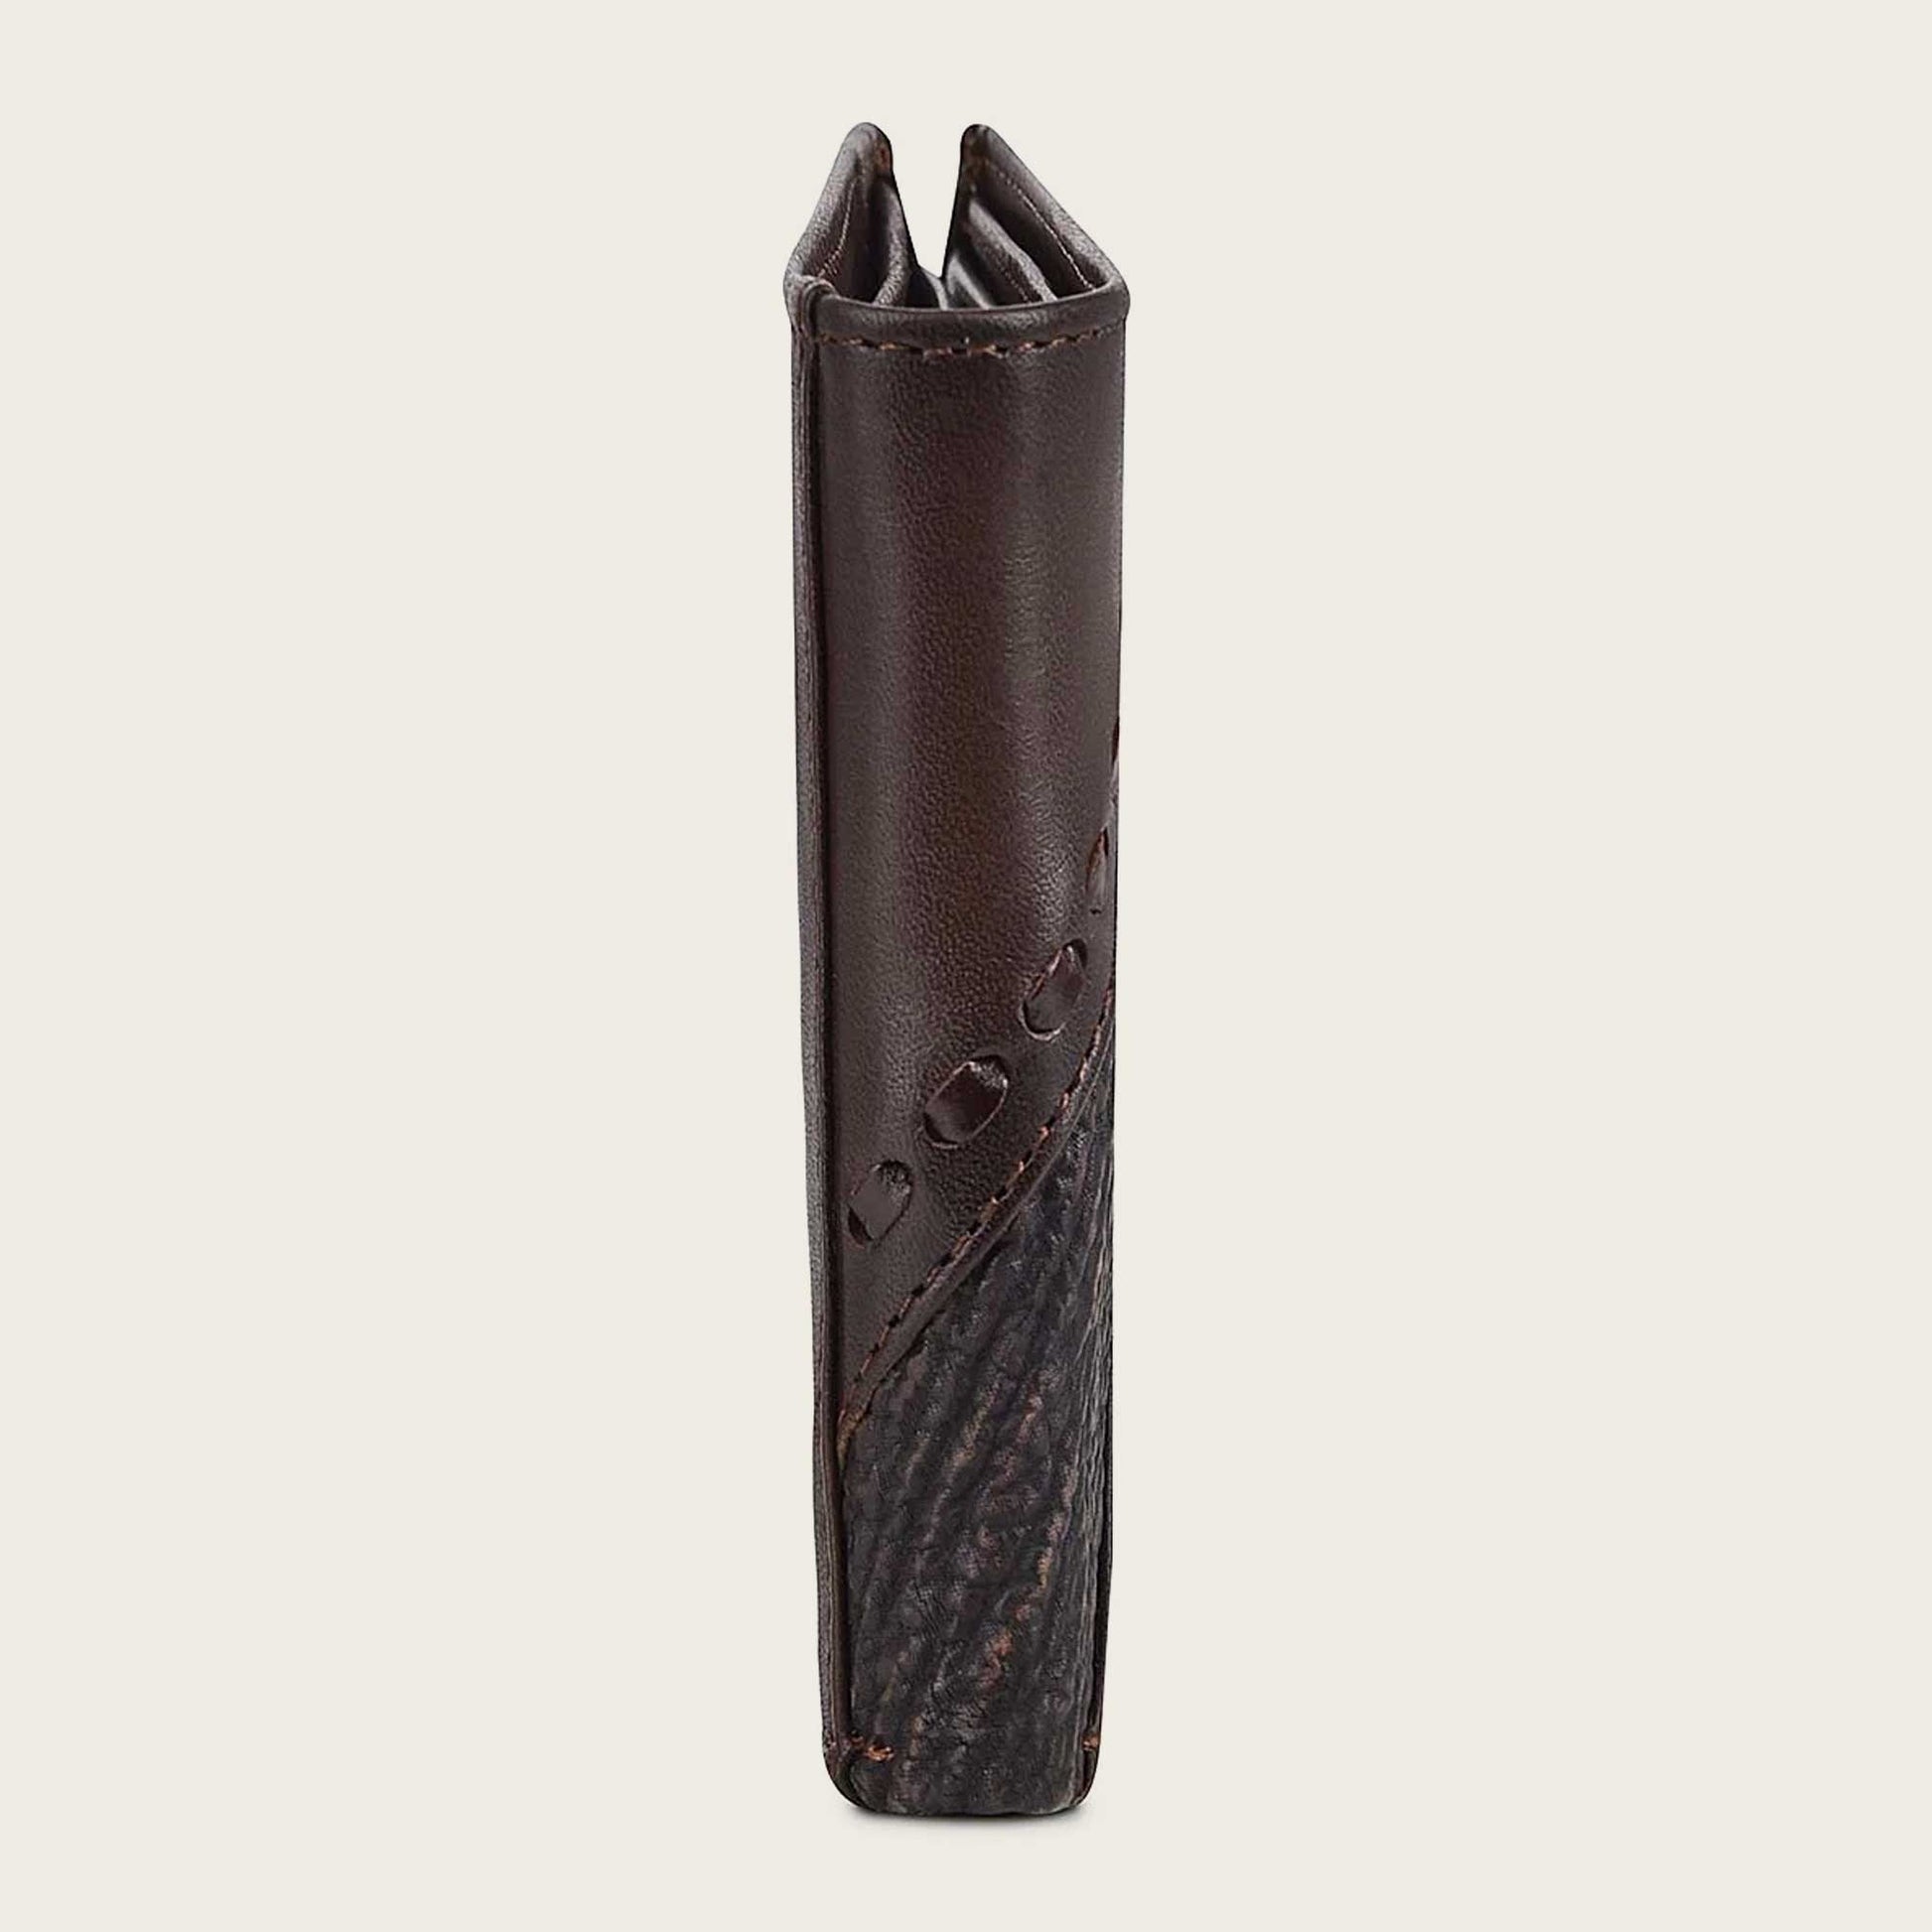 B2910LT - Cuadra Black Classic Lizard Leather Bi Fold Wallet for Men